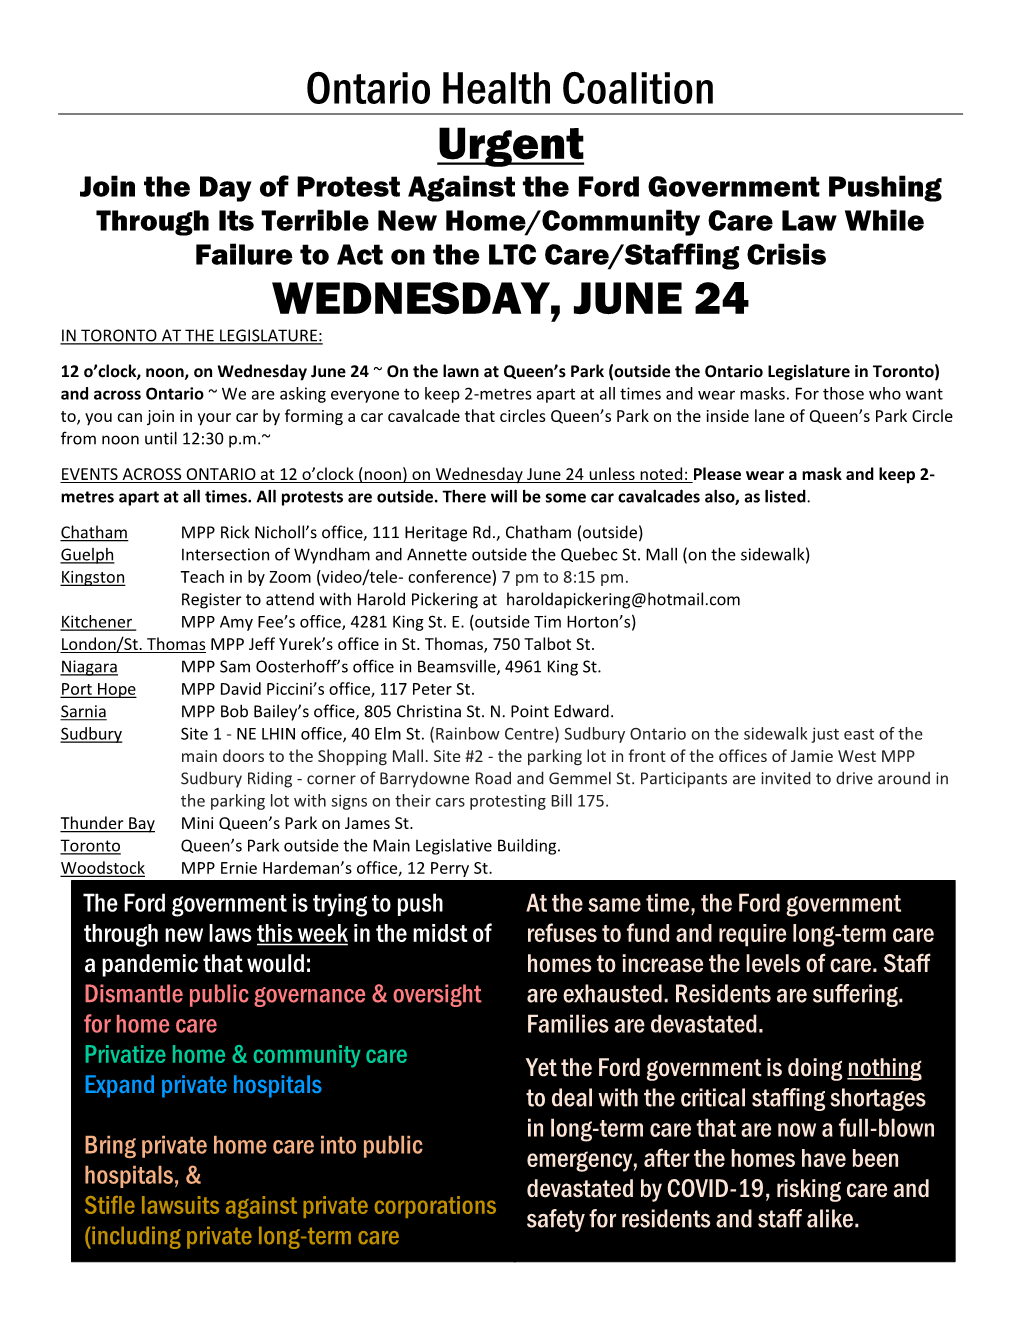 Ontario Health Coalition Urgent WEDNESDAY, JUNE 24